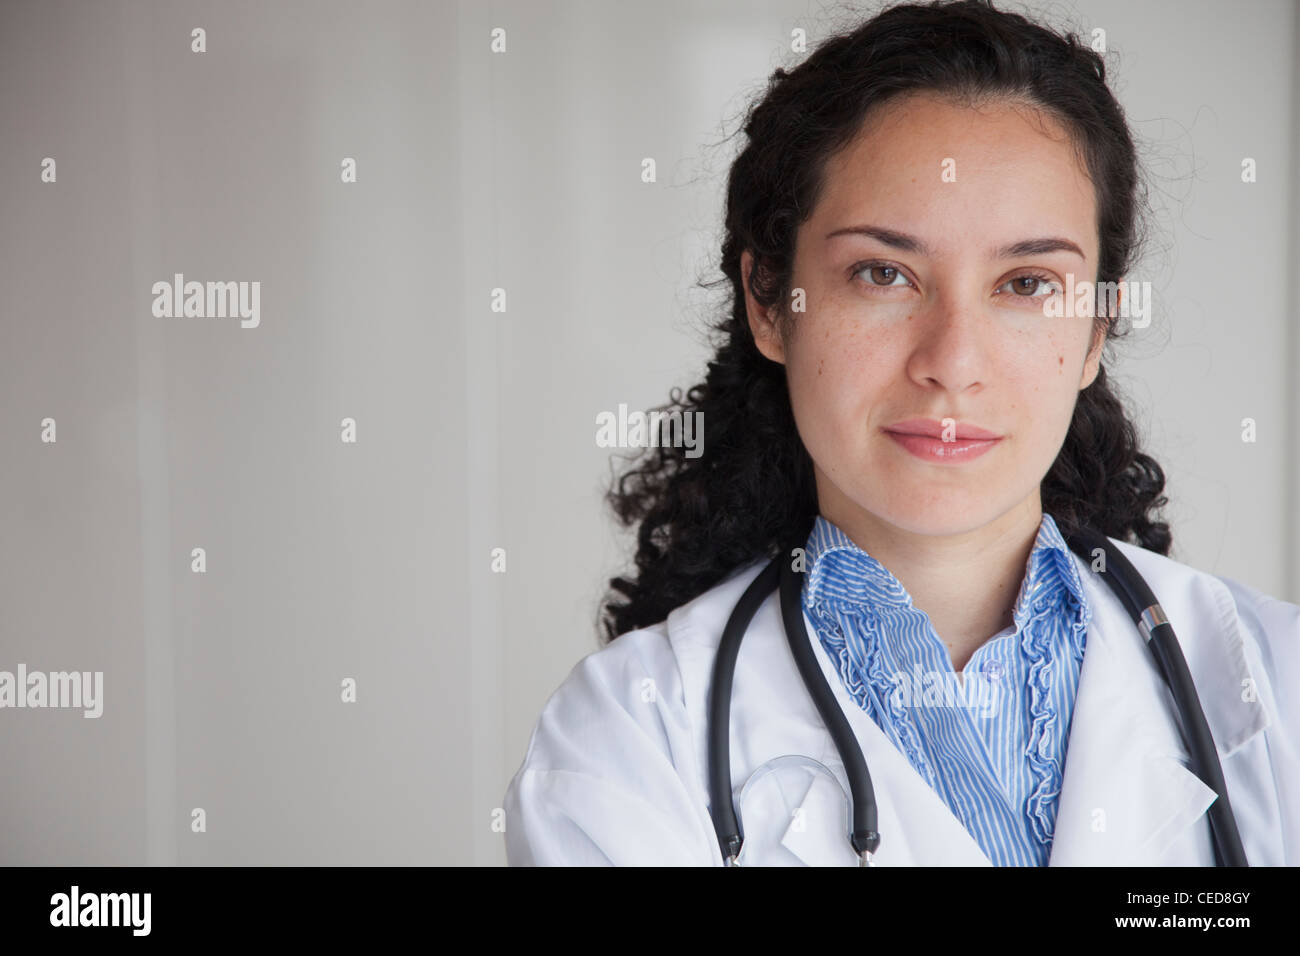 De graves doctor in lab coat Banque D'Images